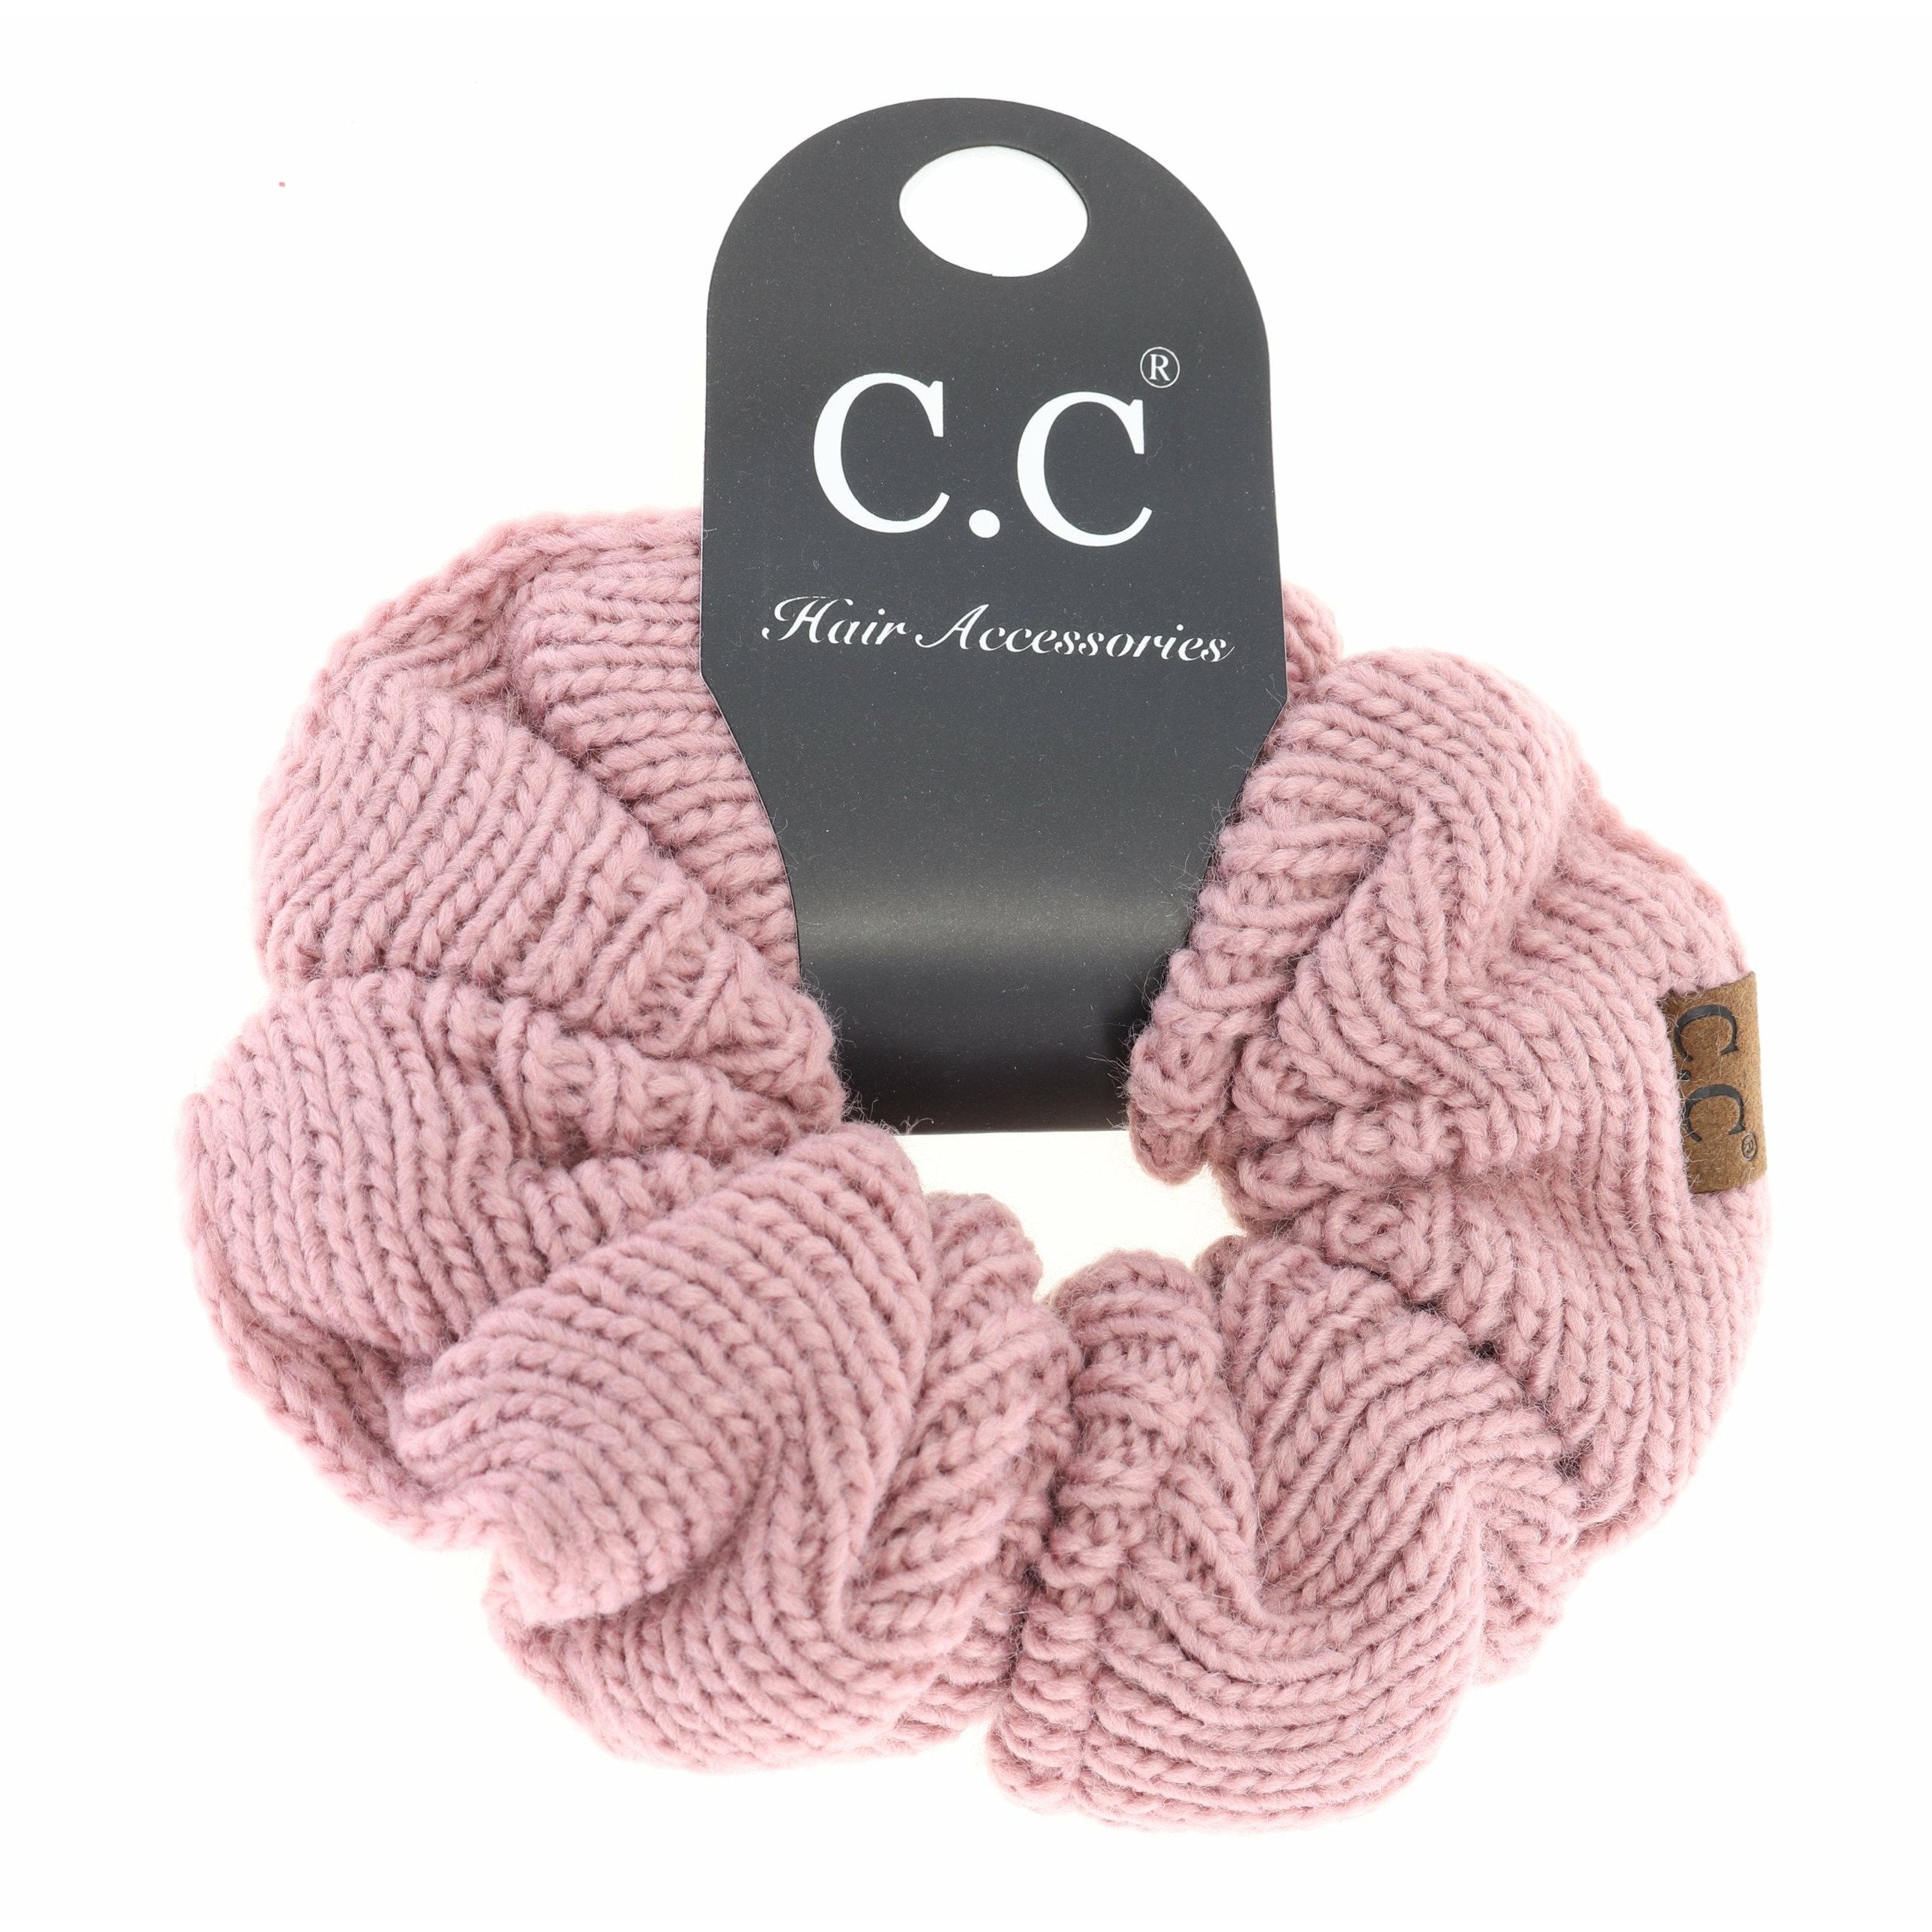 Women's Solid Knit Ponytail CC Scrunchie